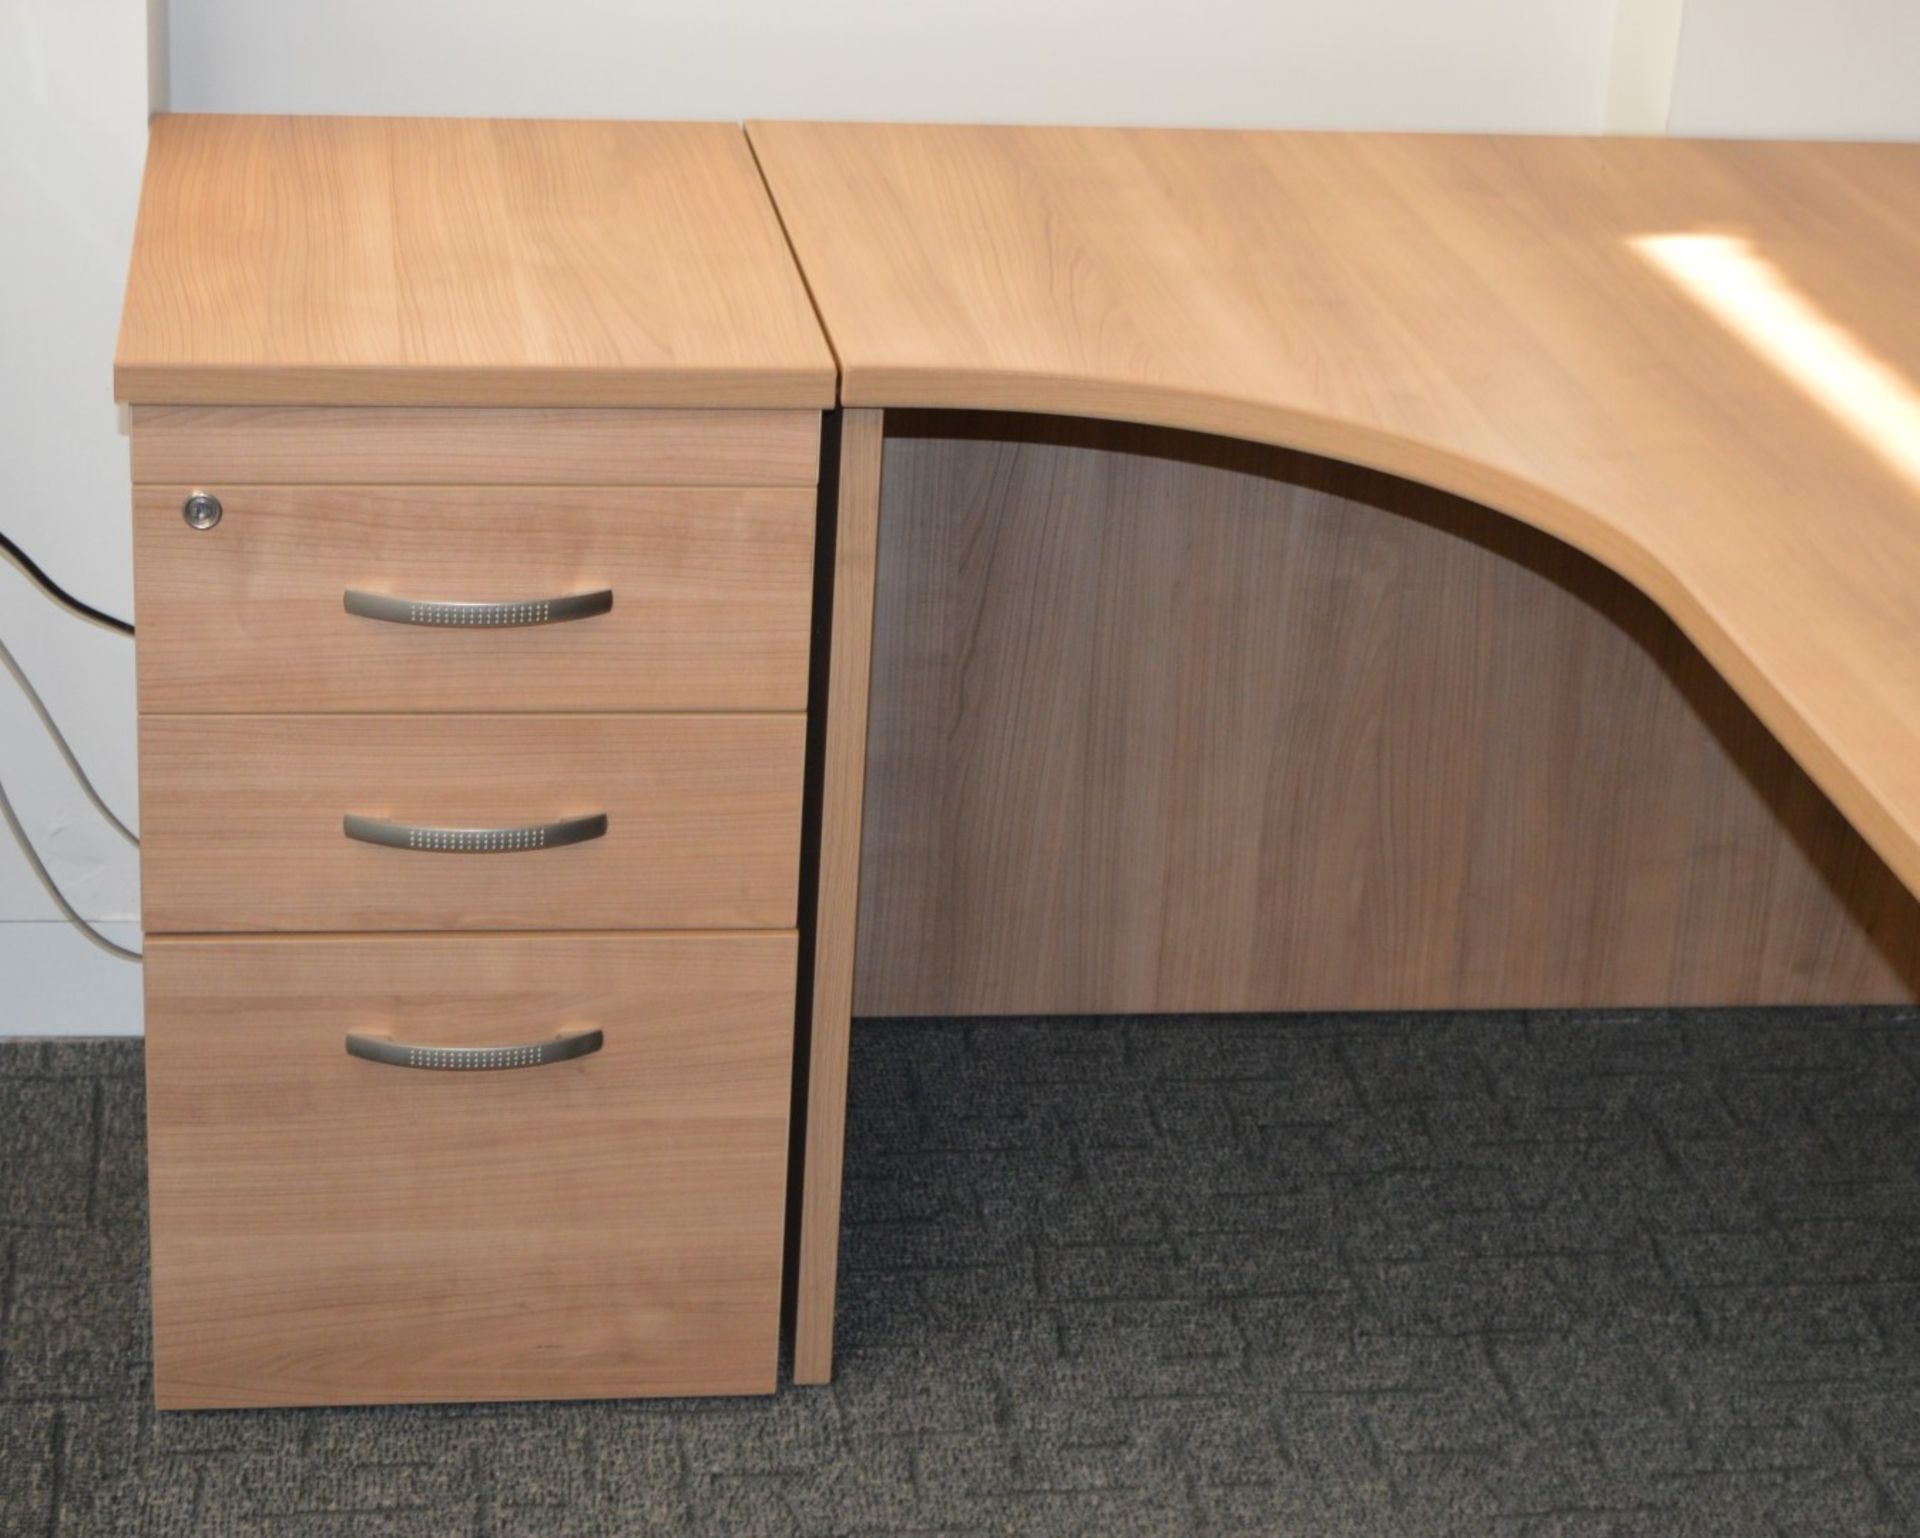 1 x Ergonomical Left Hand Office Desk With Three Drawer Pedestal - Modern Birch Finish - CL400 - Ref - Image 3 of 4